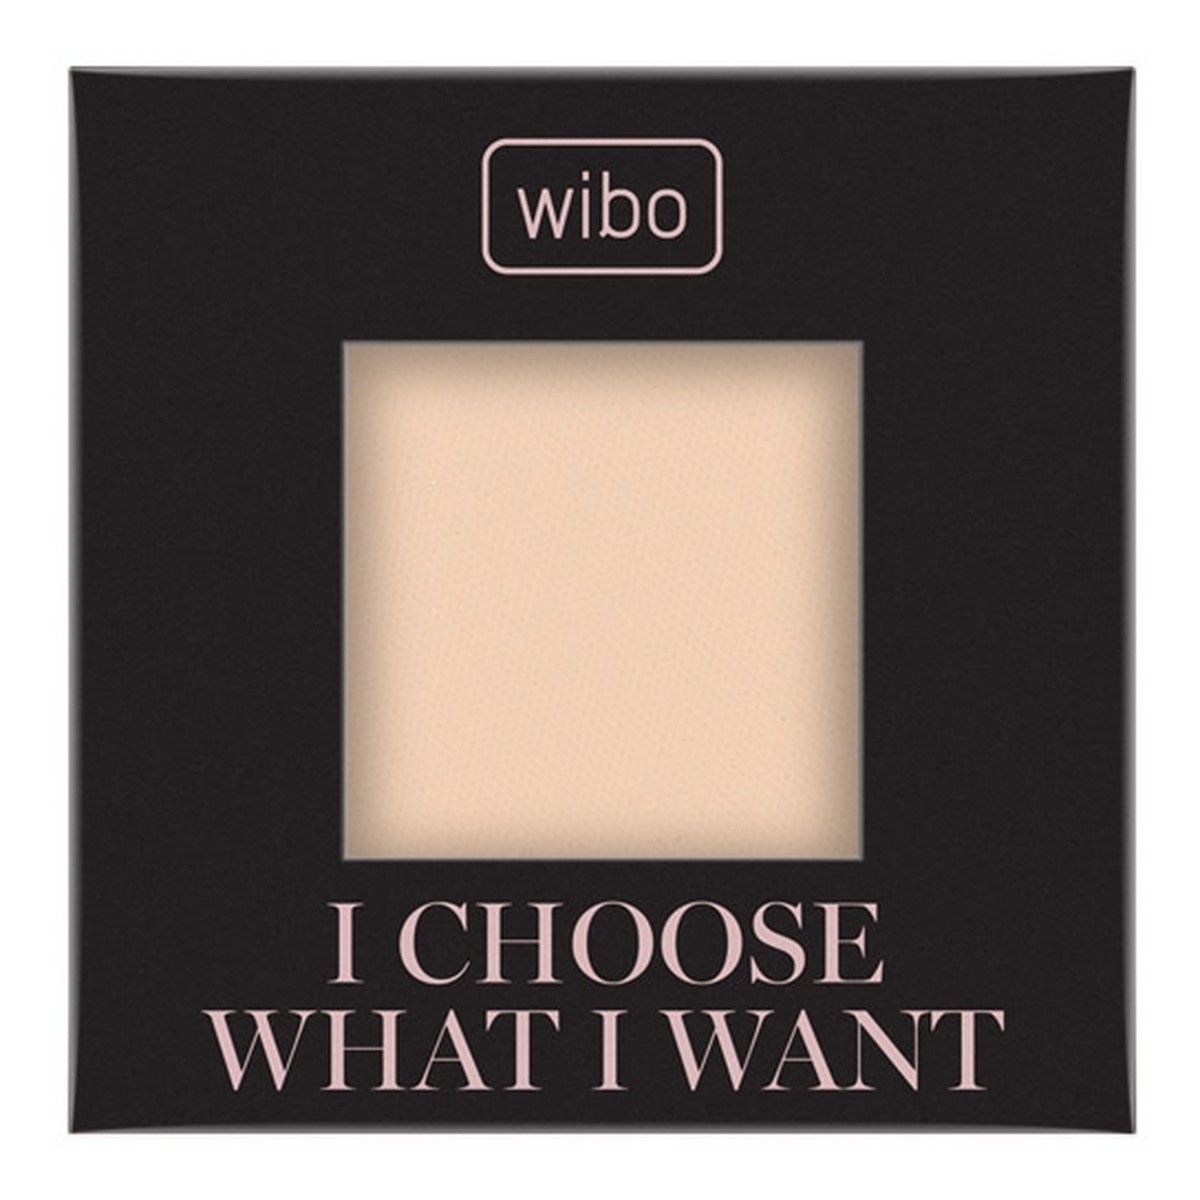 Wibo I choose what I want HD Puder bananowy 3g